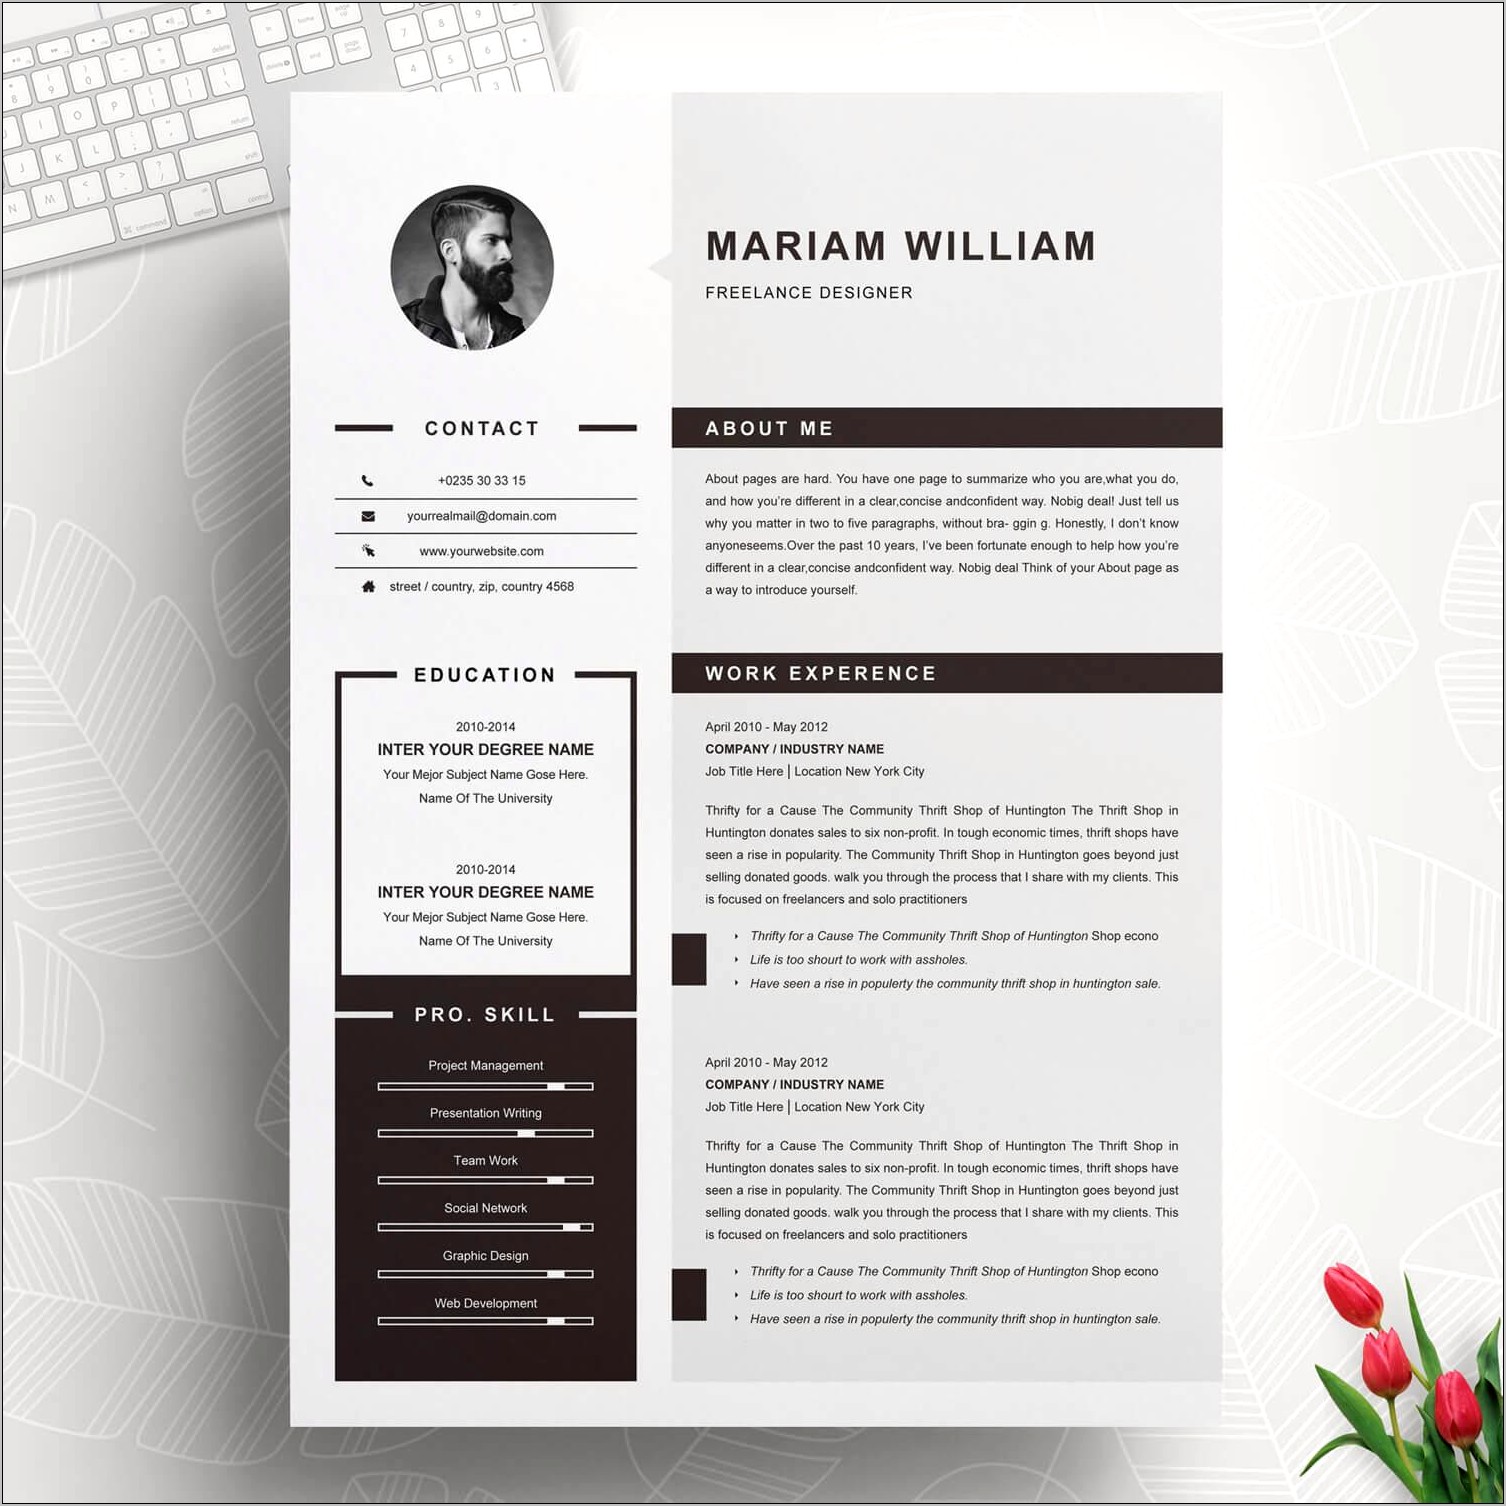 Graphic Design Freelance Work On Resume